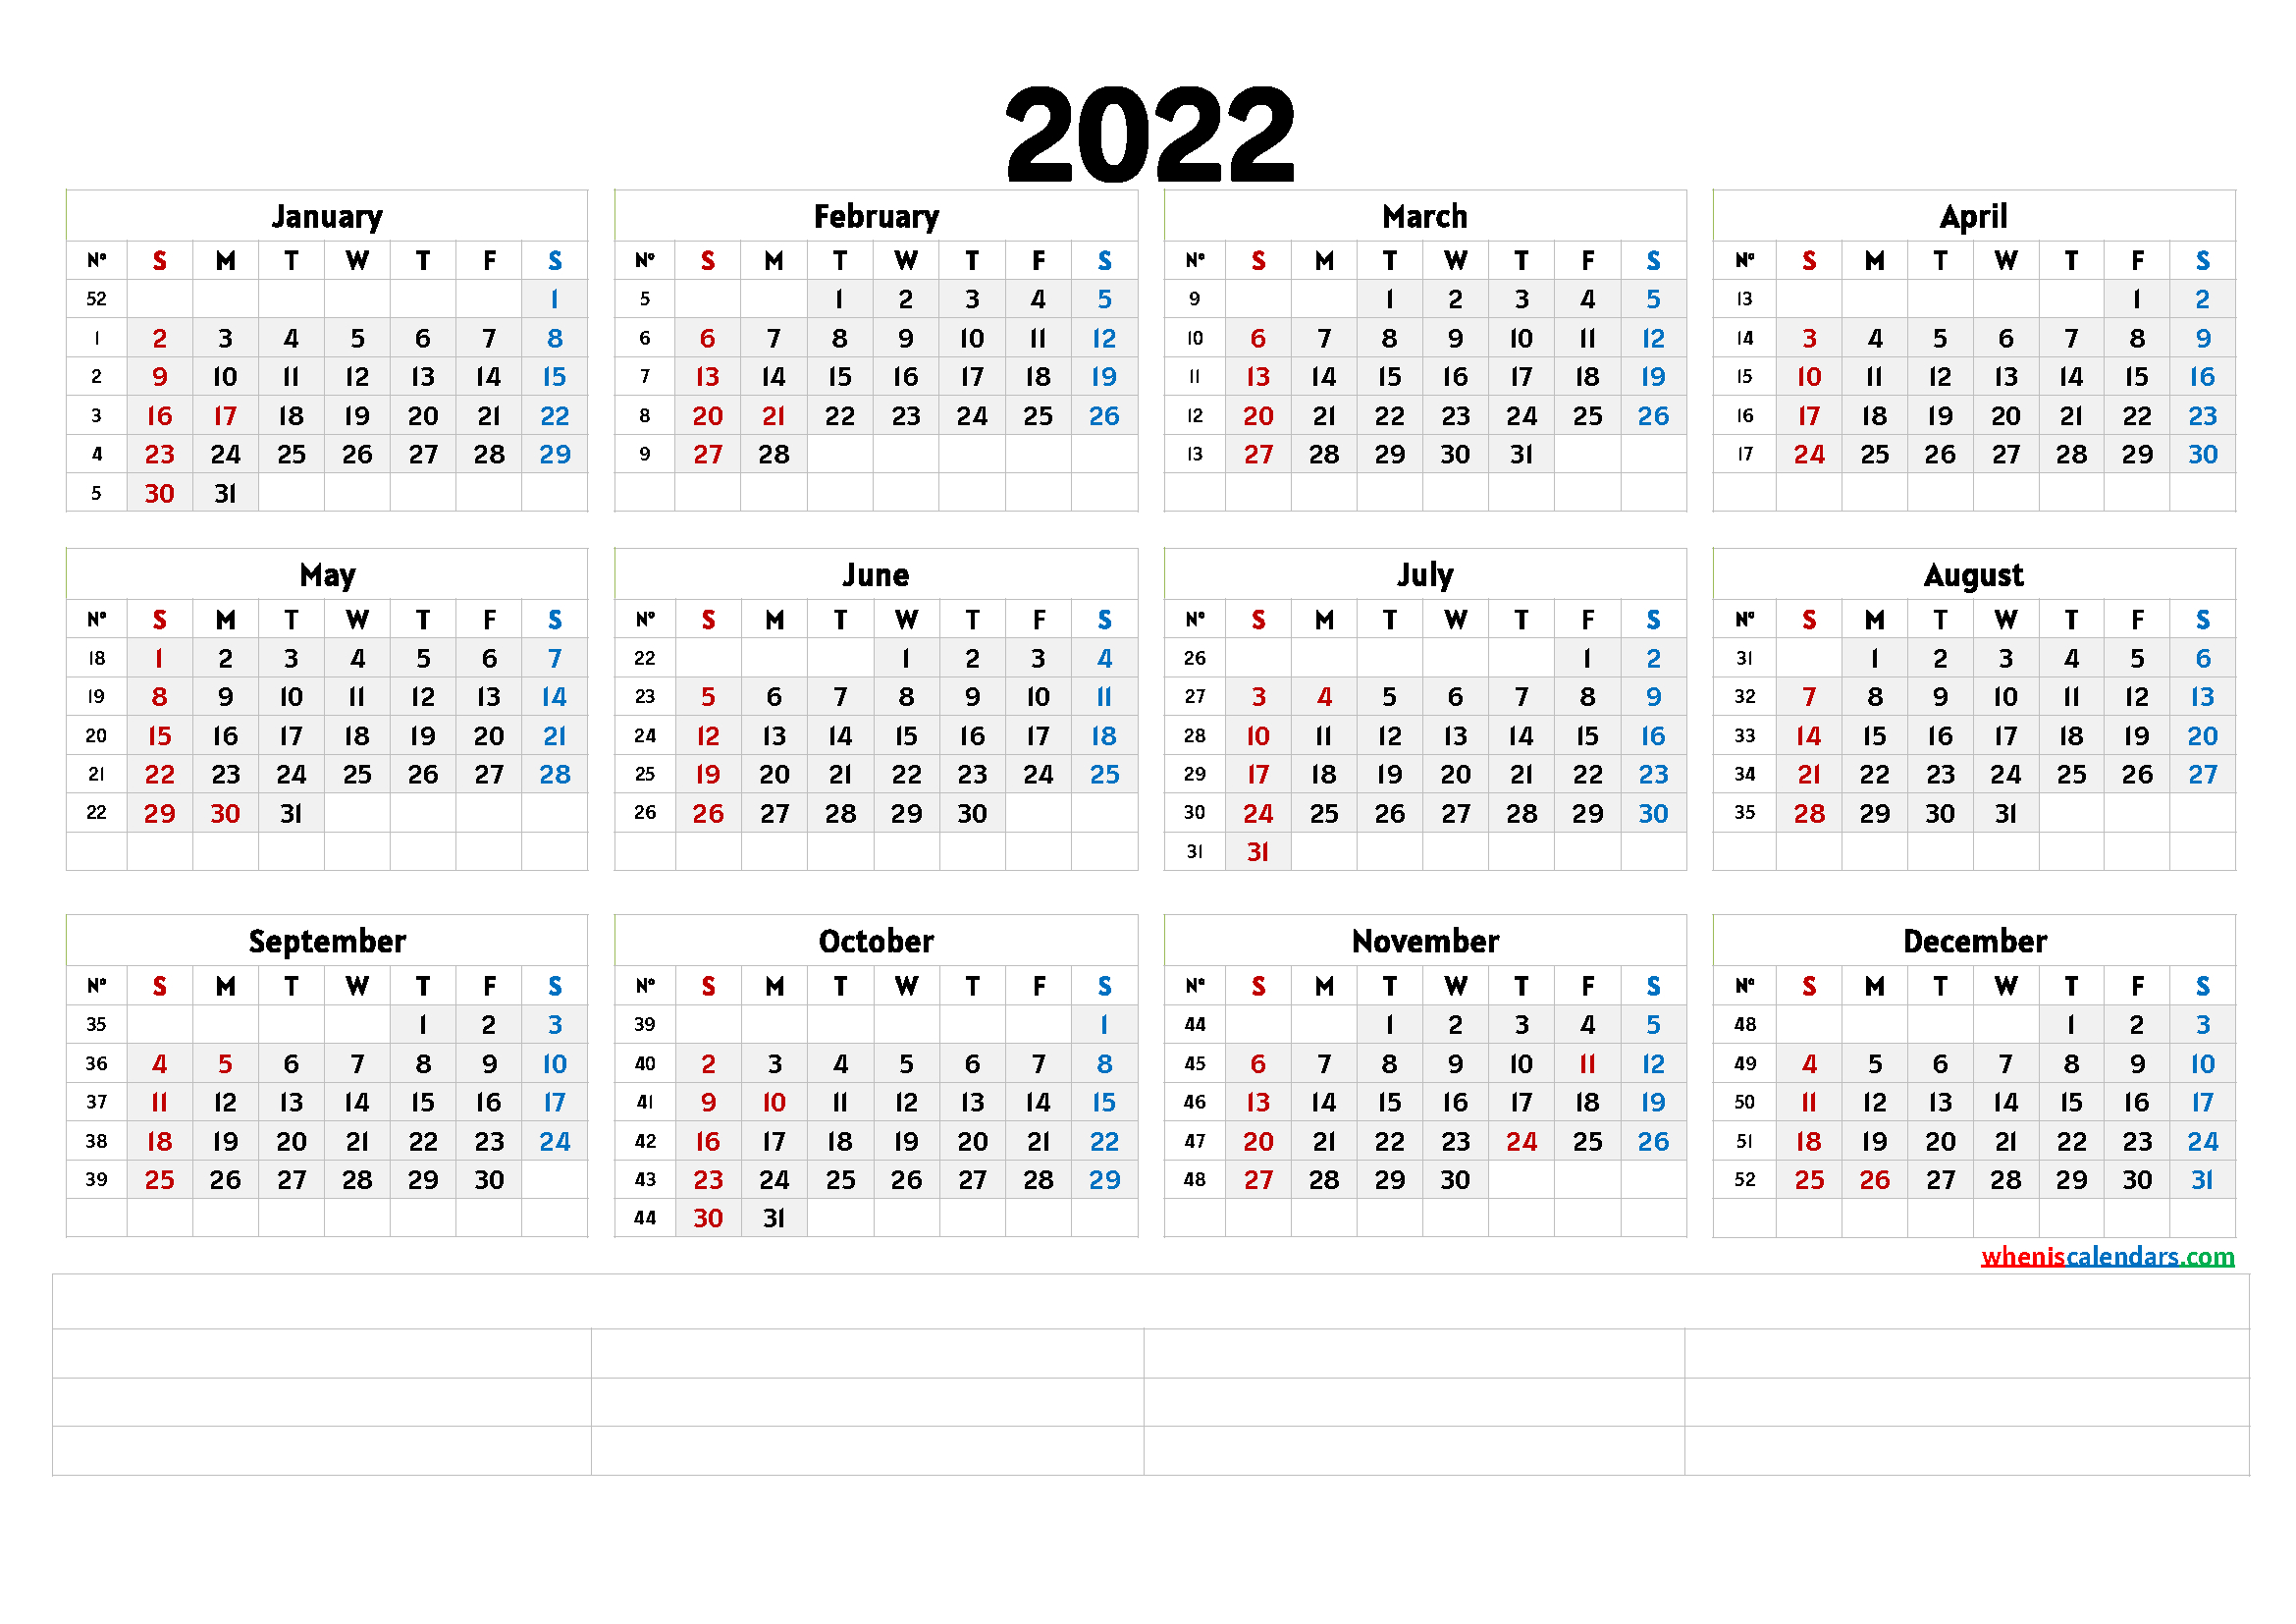 2022 Free Yearly Calendar Template Word - 2022 Calendar